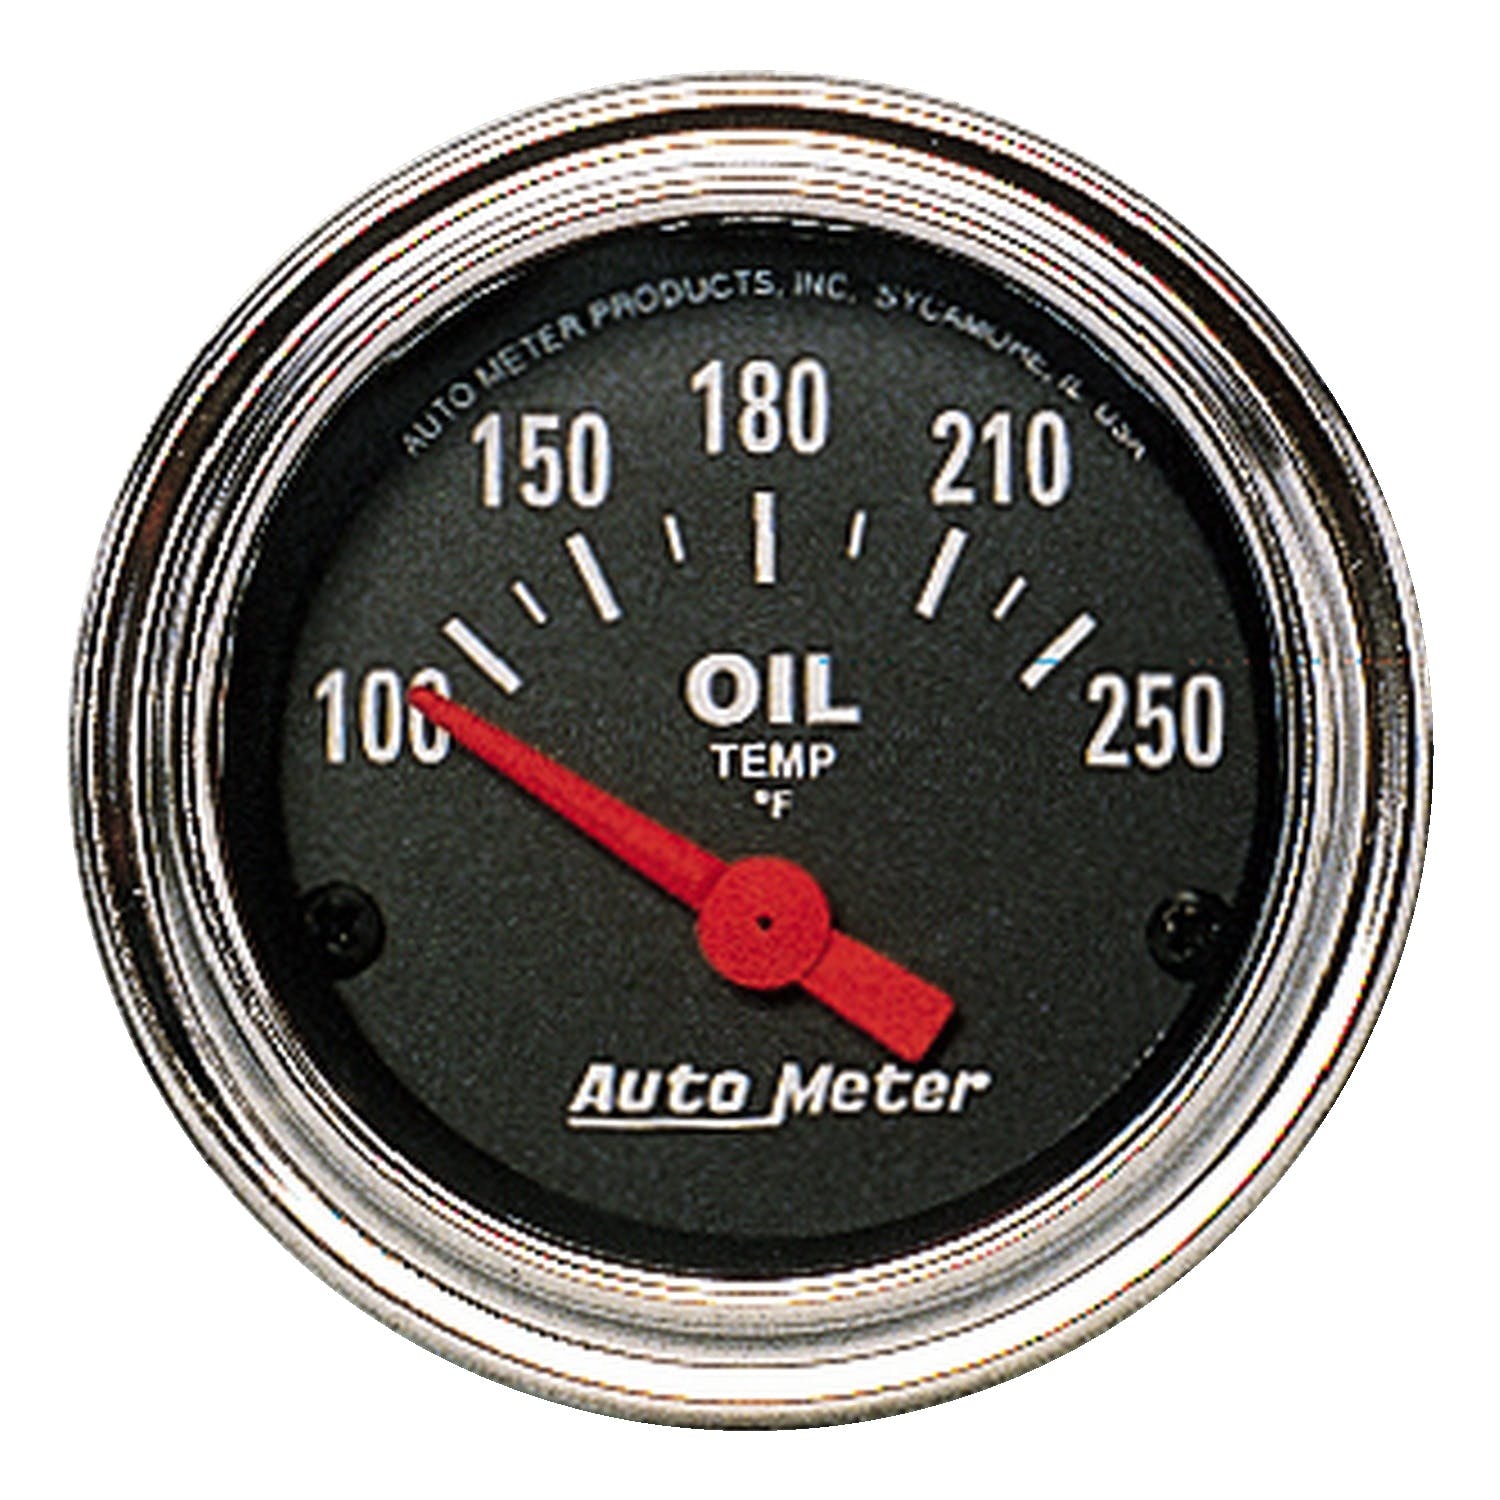 AutoMeter Products 2542 Oil Temp Gauge 100-250 F